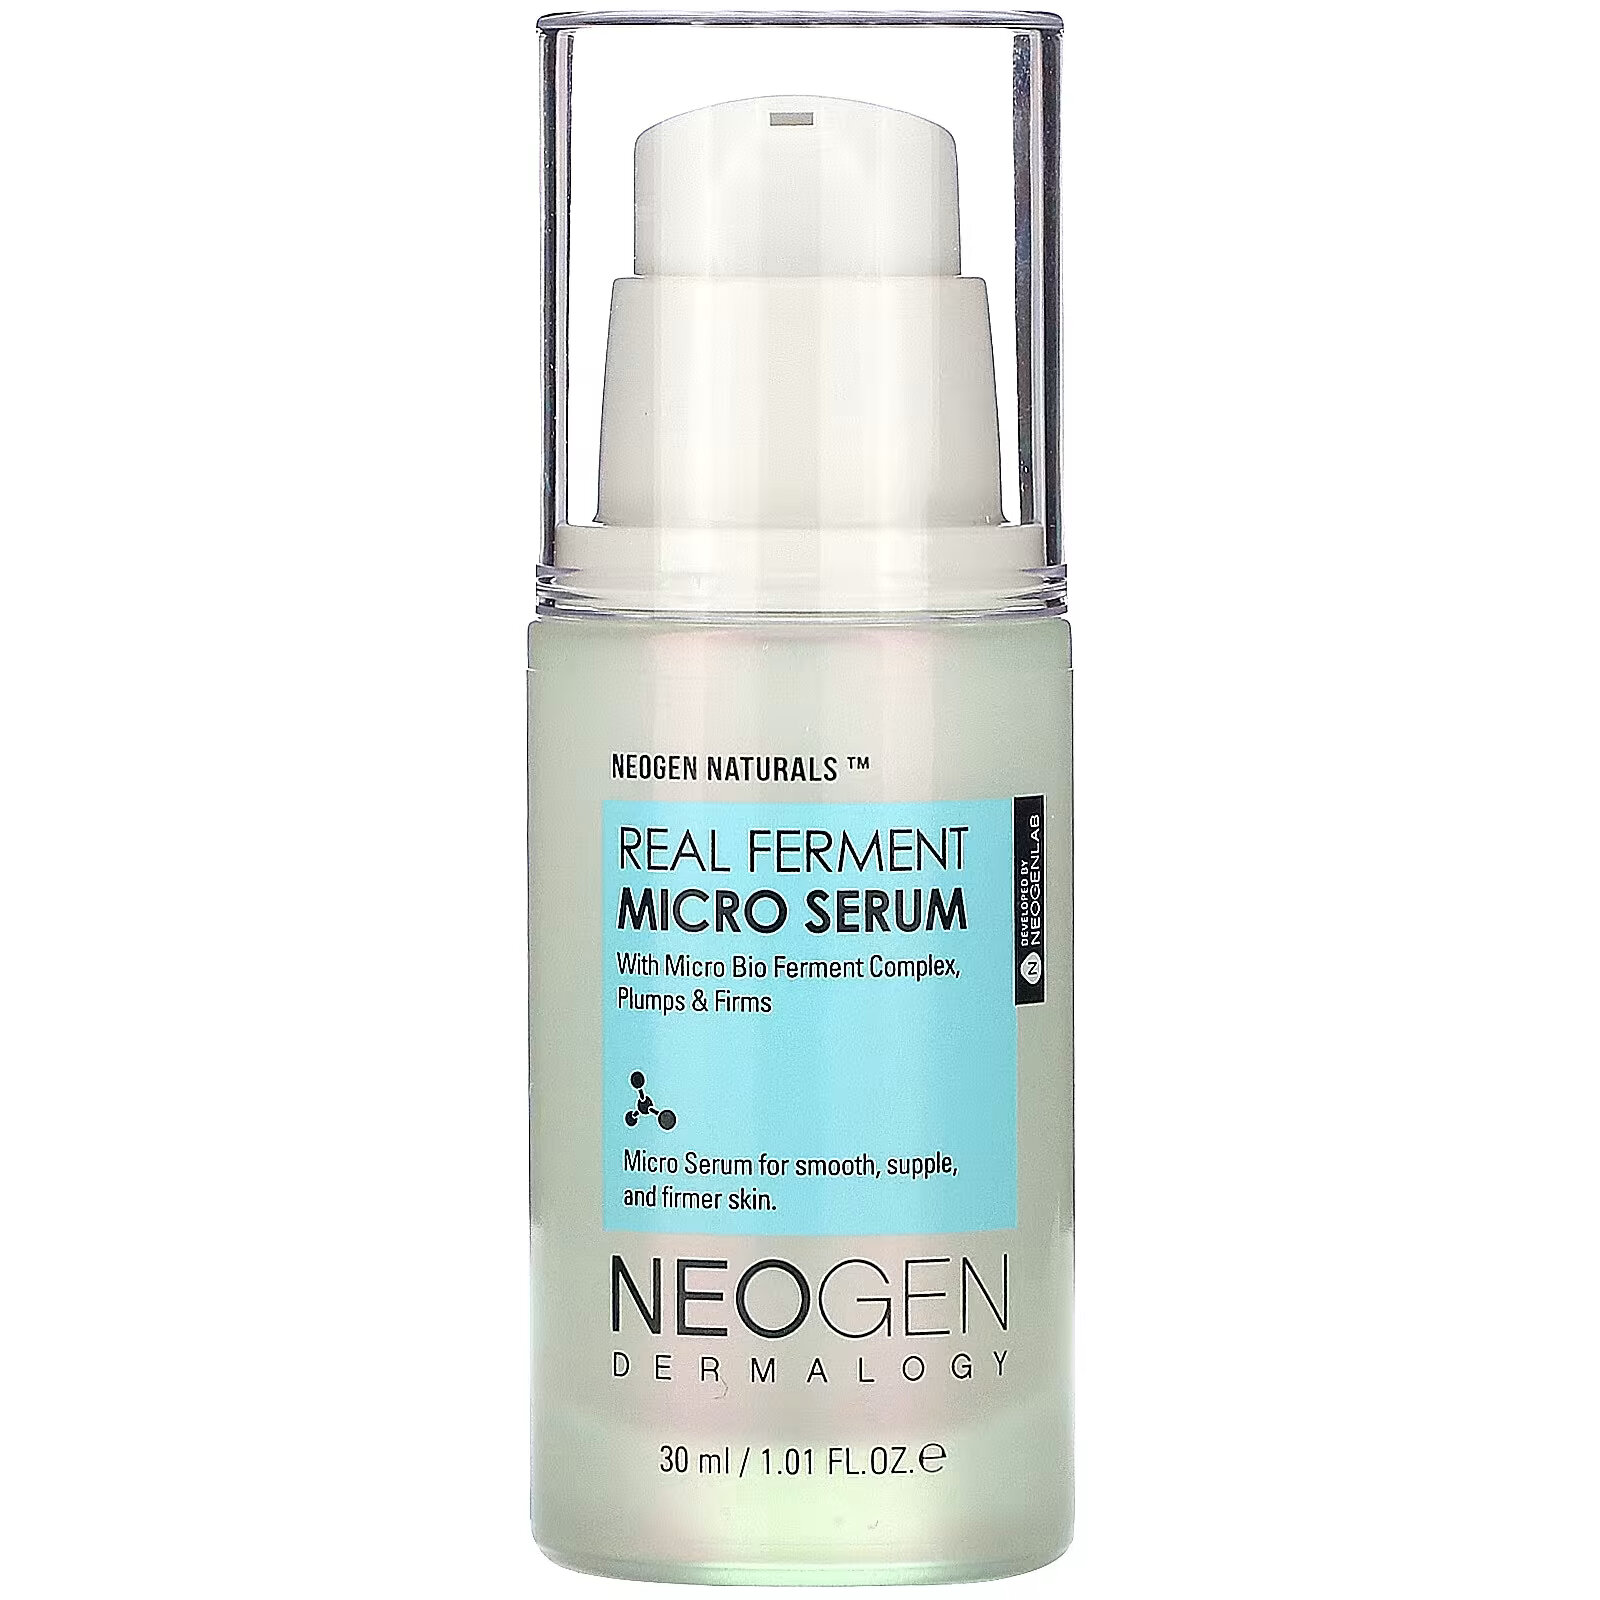 Neogen, Real Ferment Micro Serum, микросыворотка с ферментами, 30 мл (1,01 унции) neogen real ferment micro serum микросыворотка с ферментами 30 мл 1 01 унции